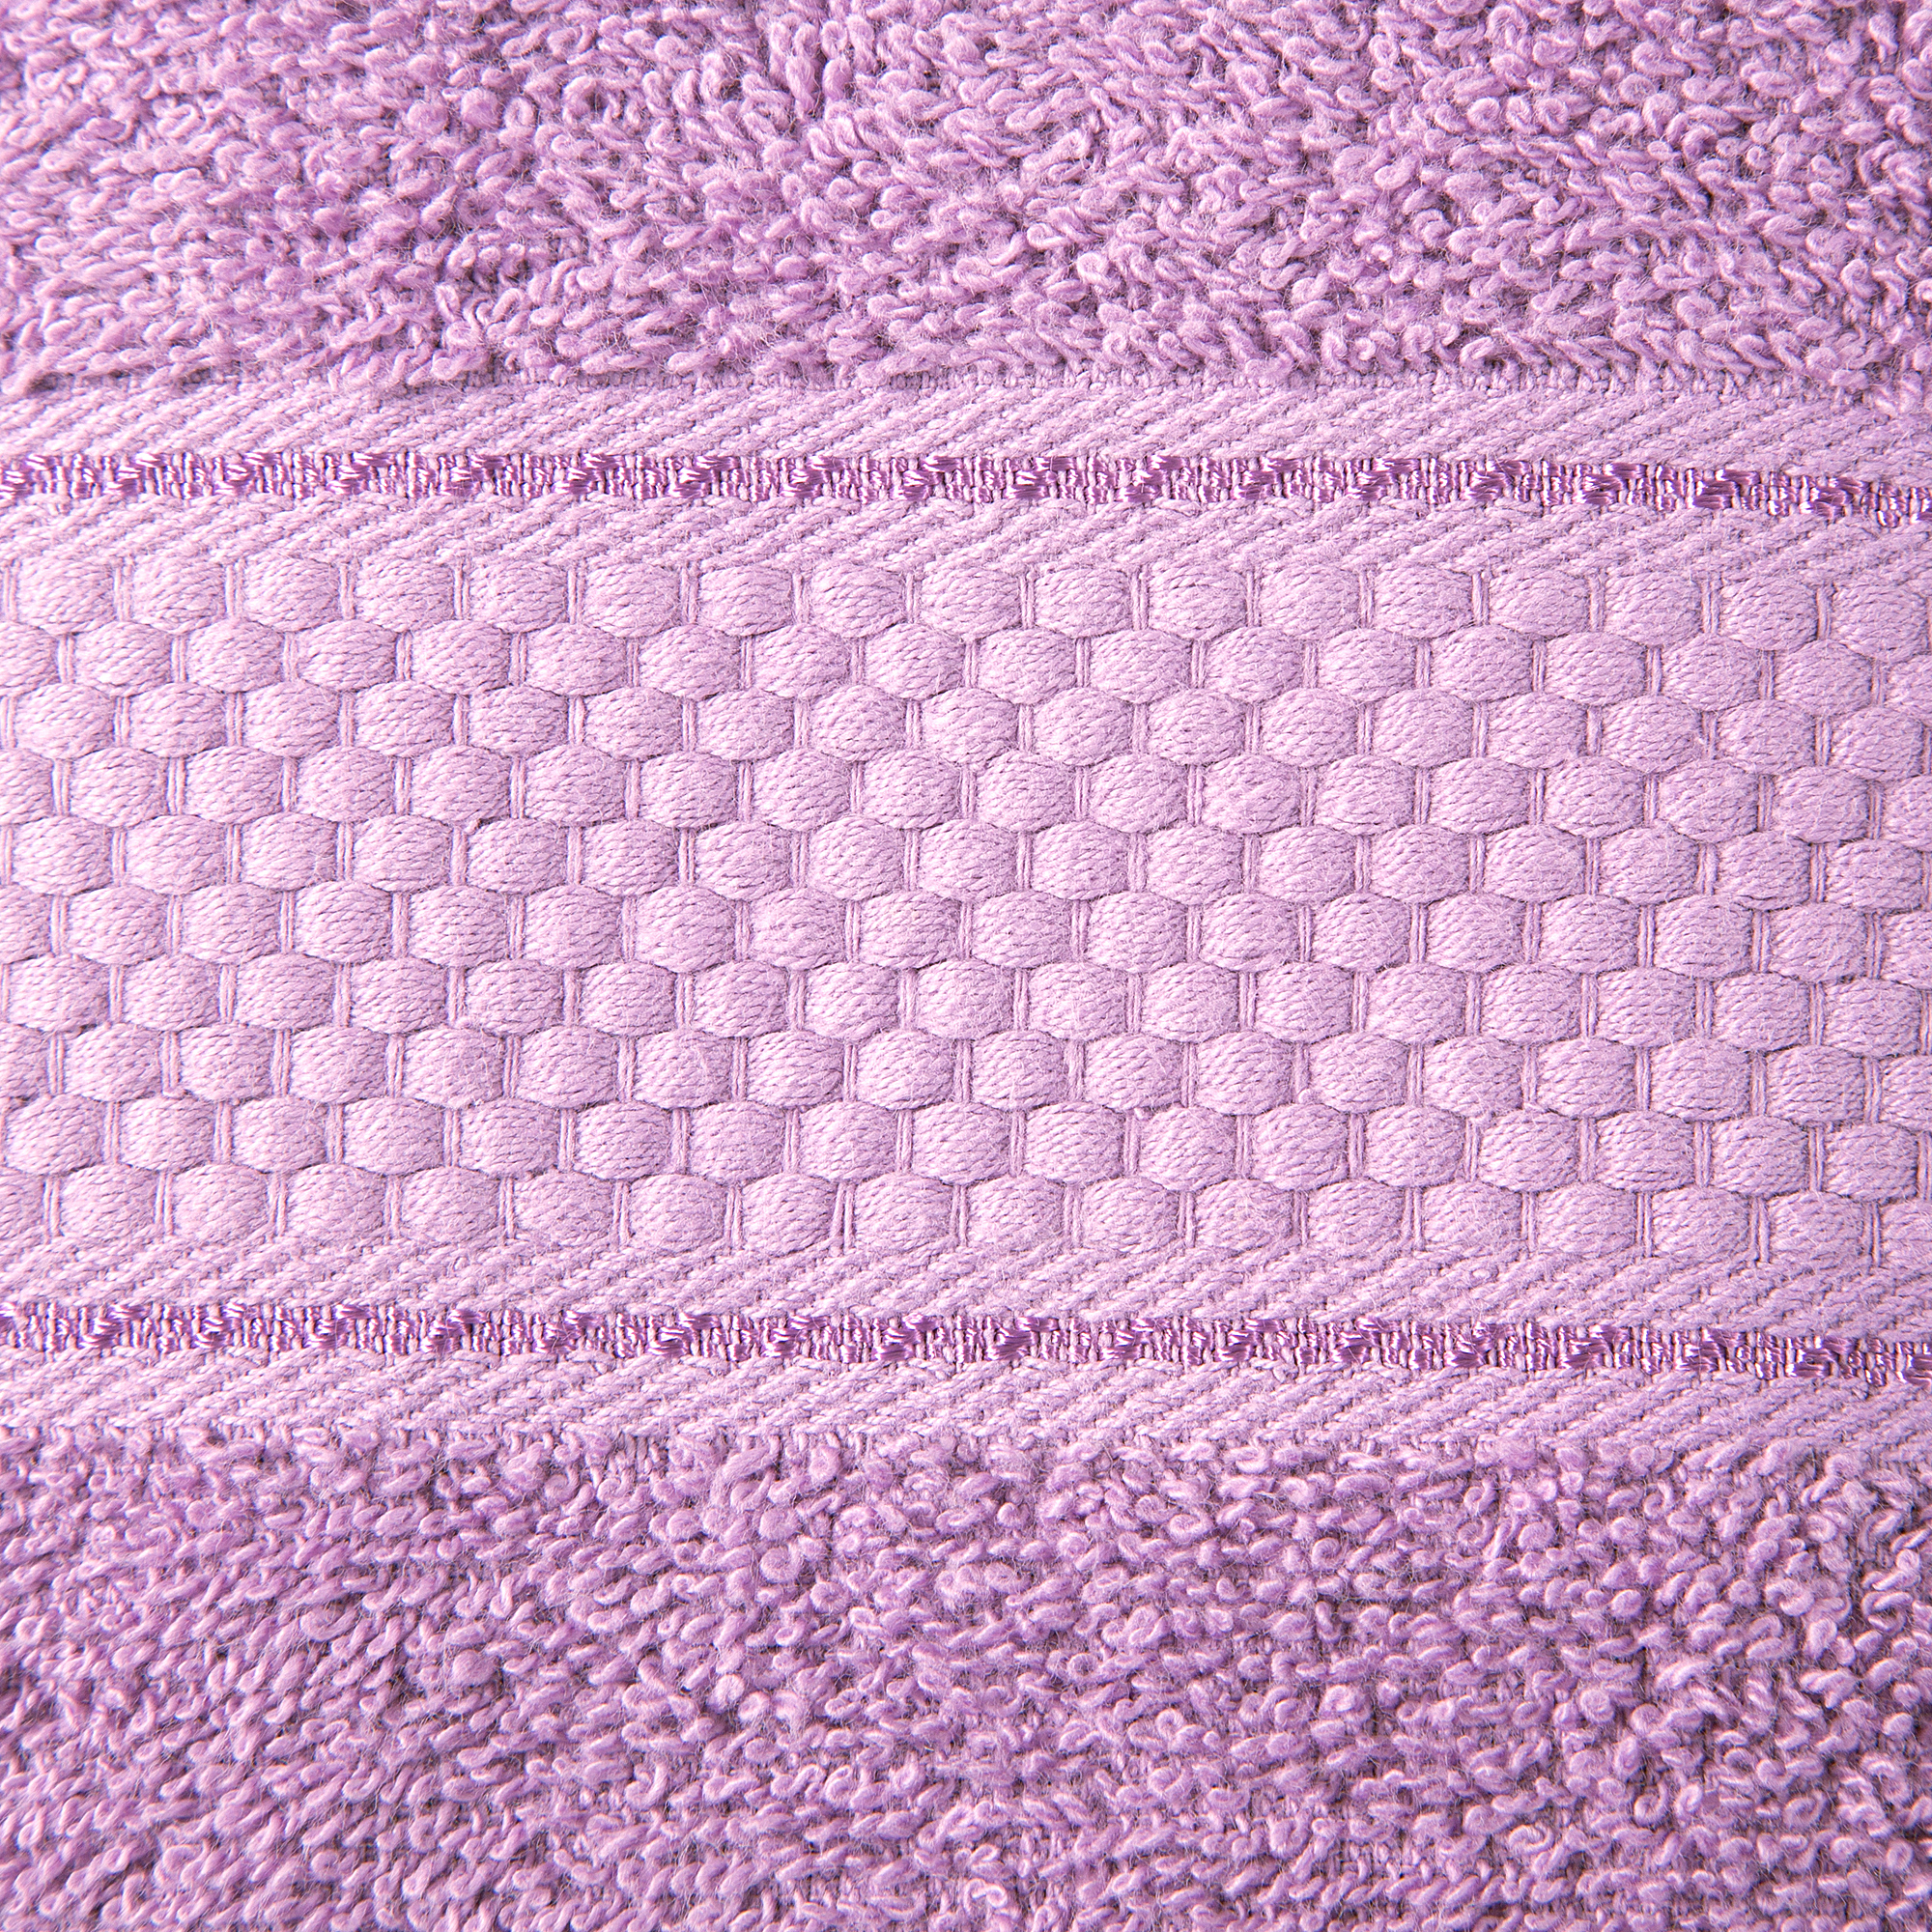 2 Pcs 100 % Cotton Premium Bath Sheet Towel Bale Set Lilac Plain